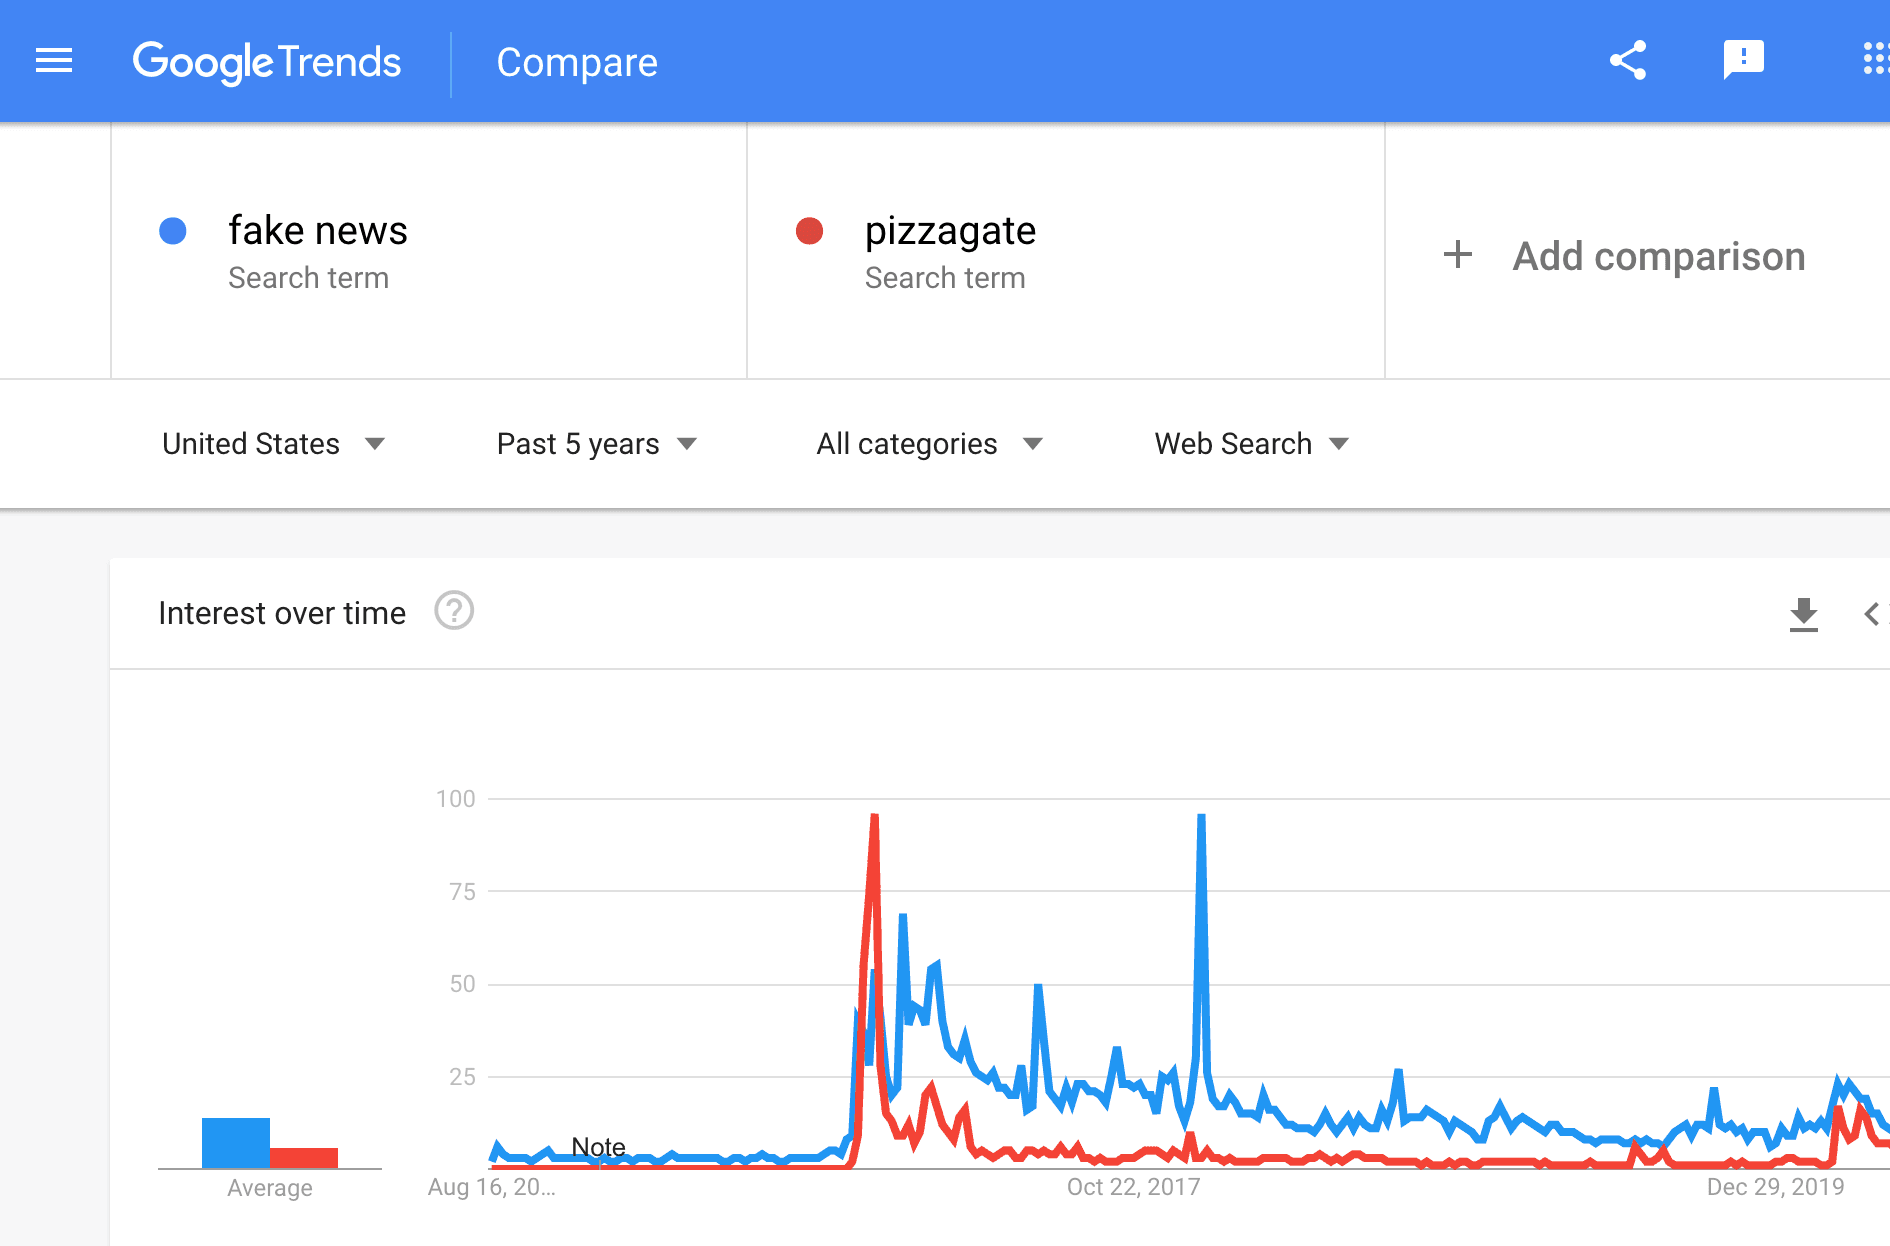 Google Trends Fake News vs. Pizzagate timeline